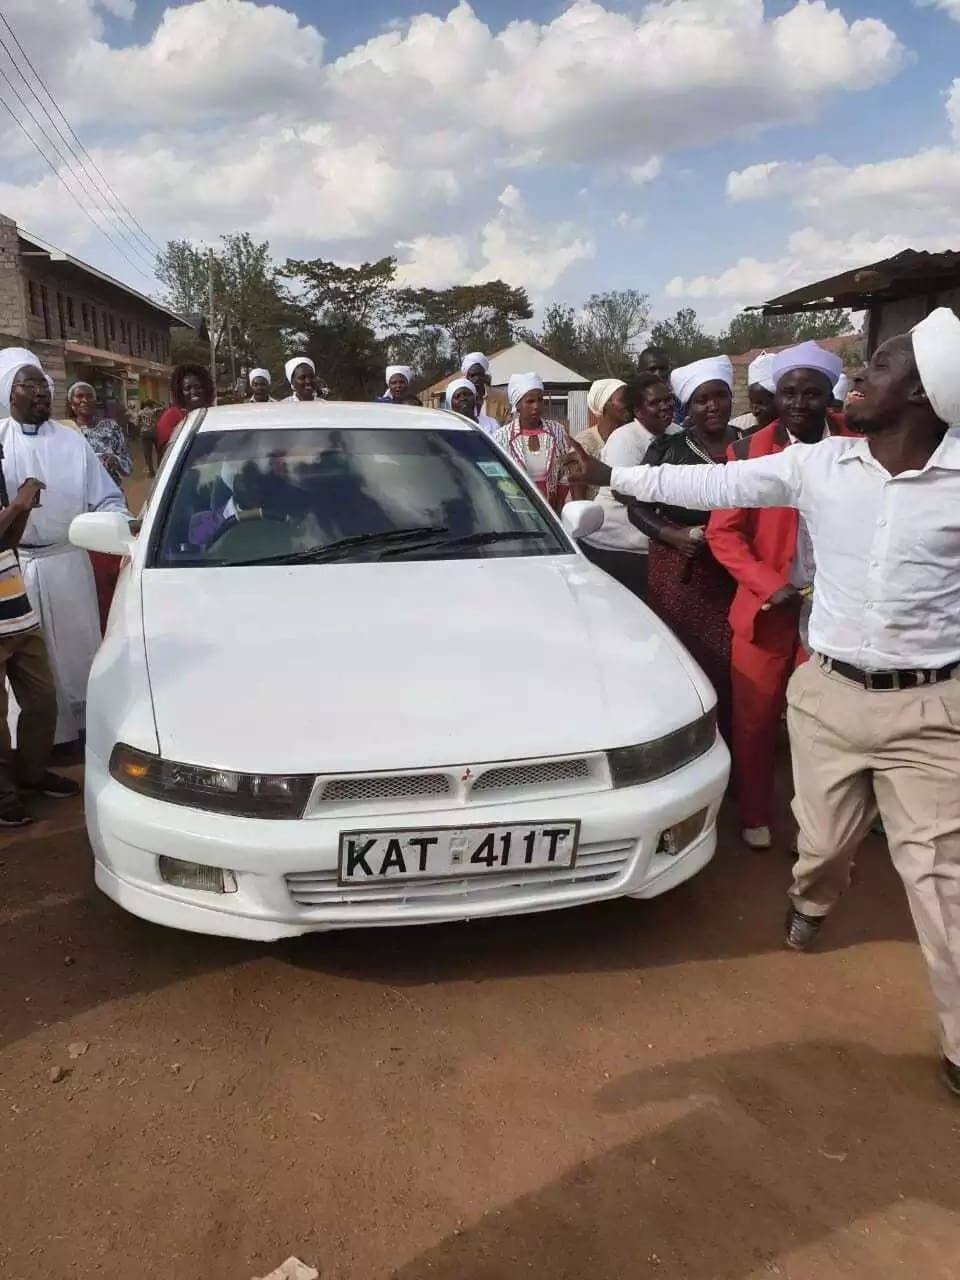 Kiambu MCA surprises pastor with vehicle as present